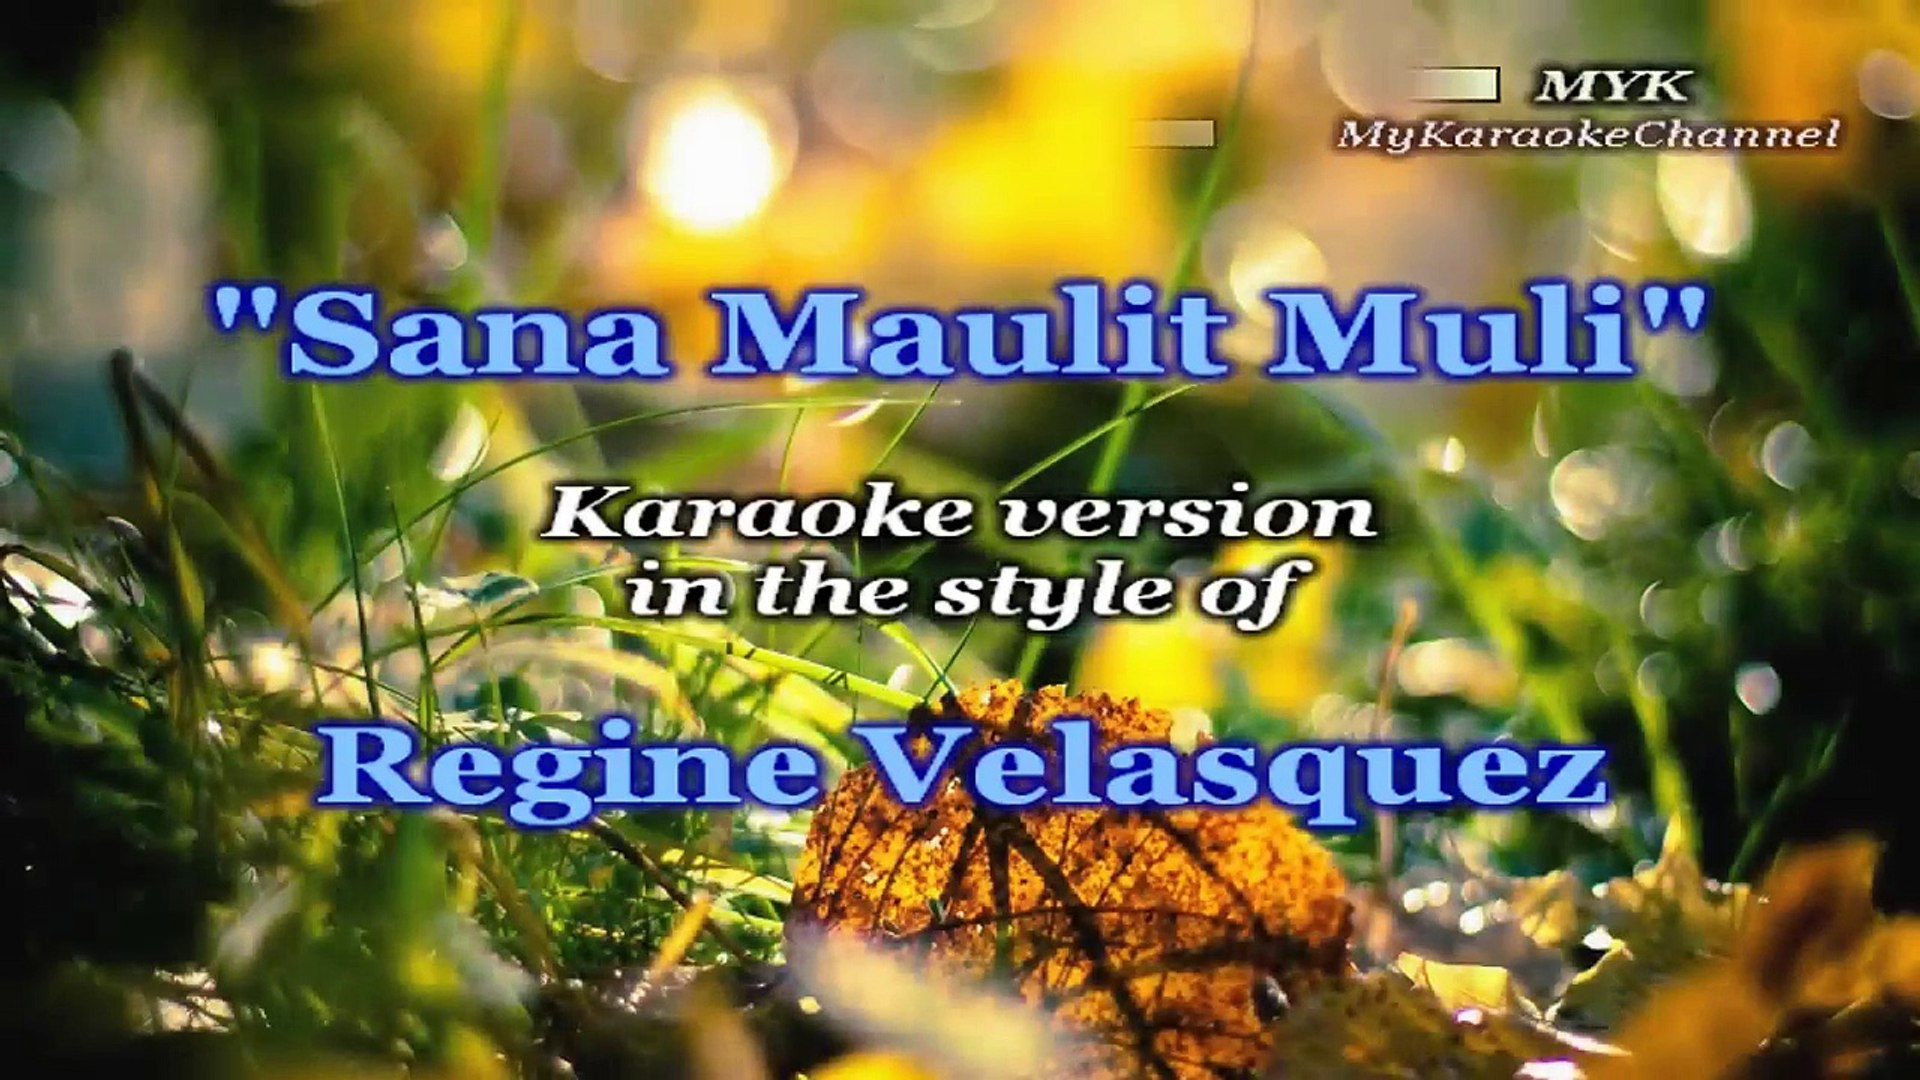 Sana Maulit Muli - Karaoke version in the style of Regine Velasquez